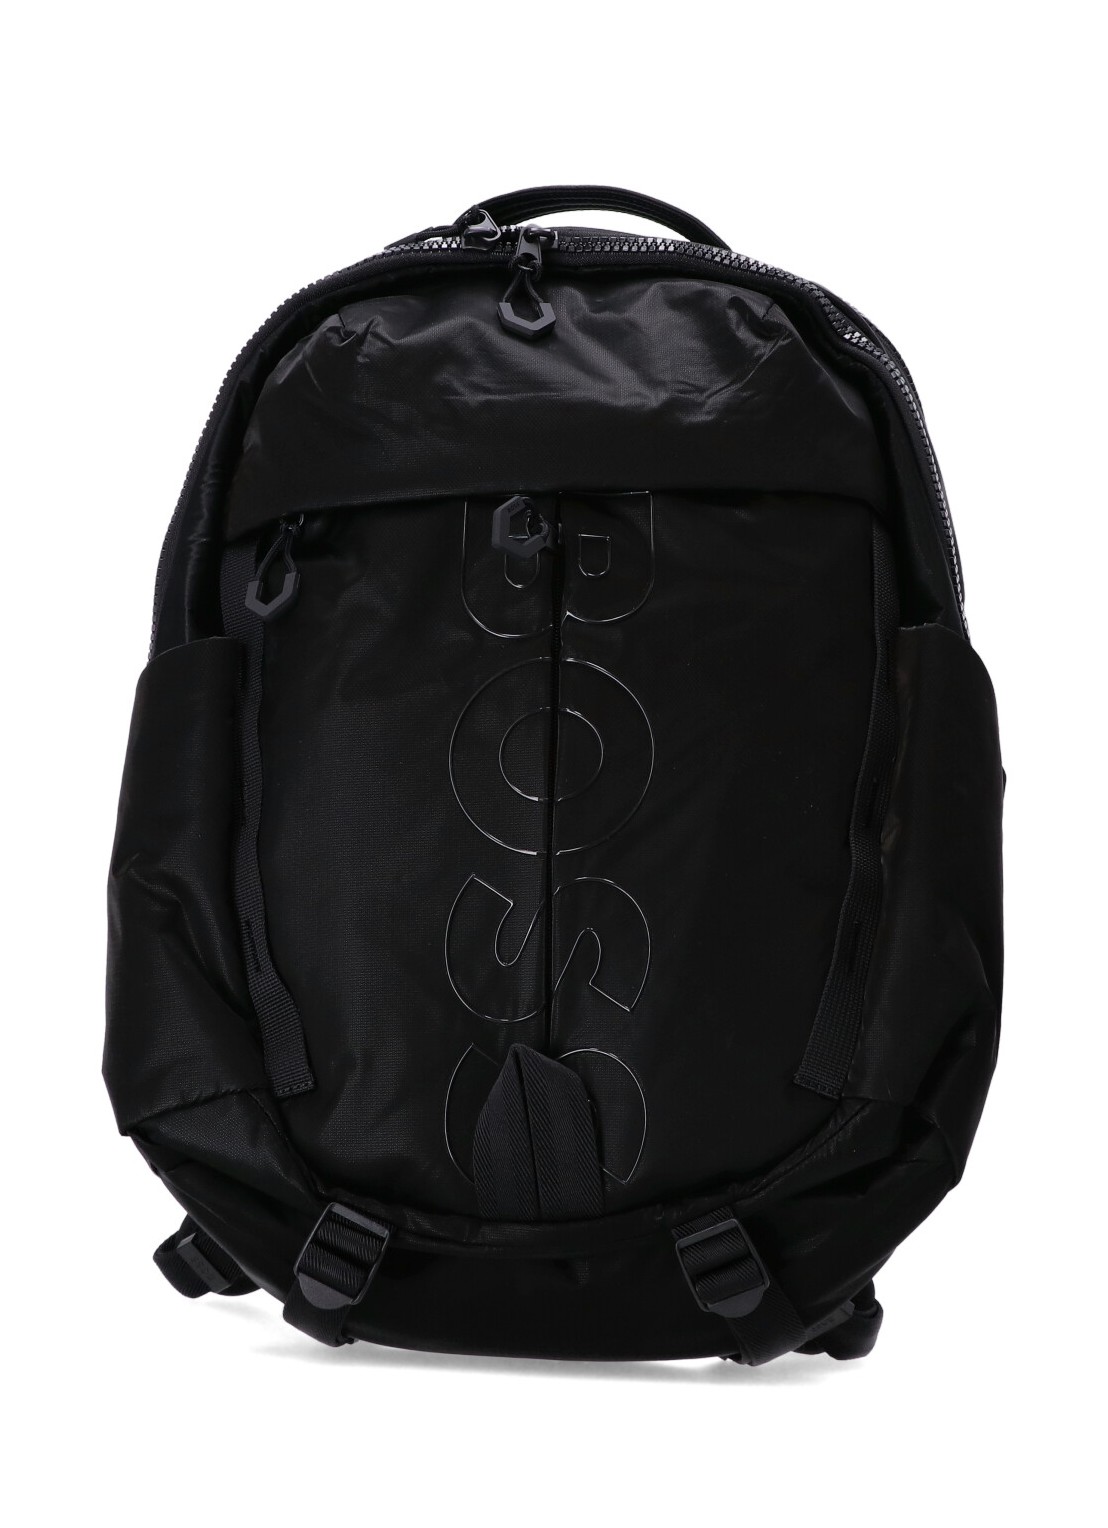 Viaje boss luggage man bryant_backpack 50513068 001 talla negro
 